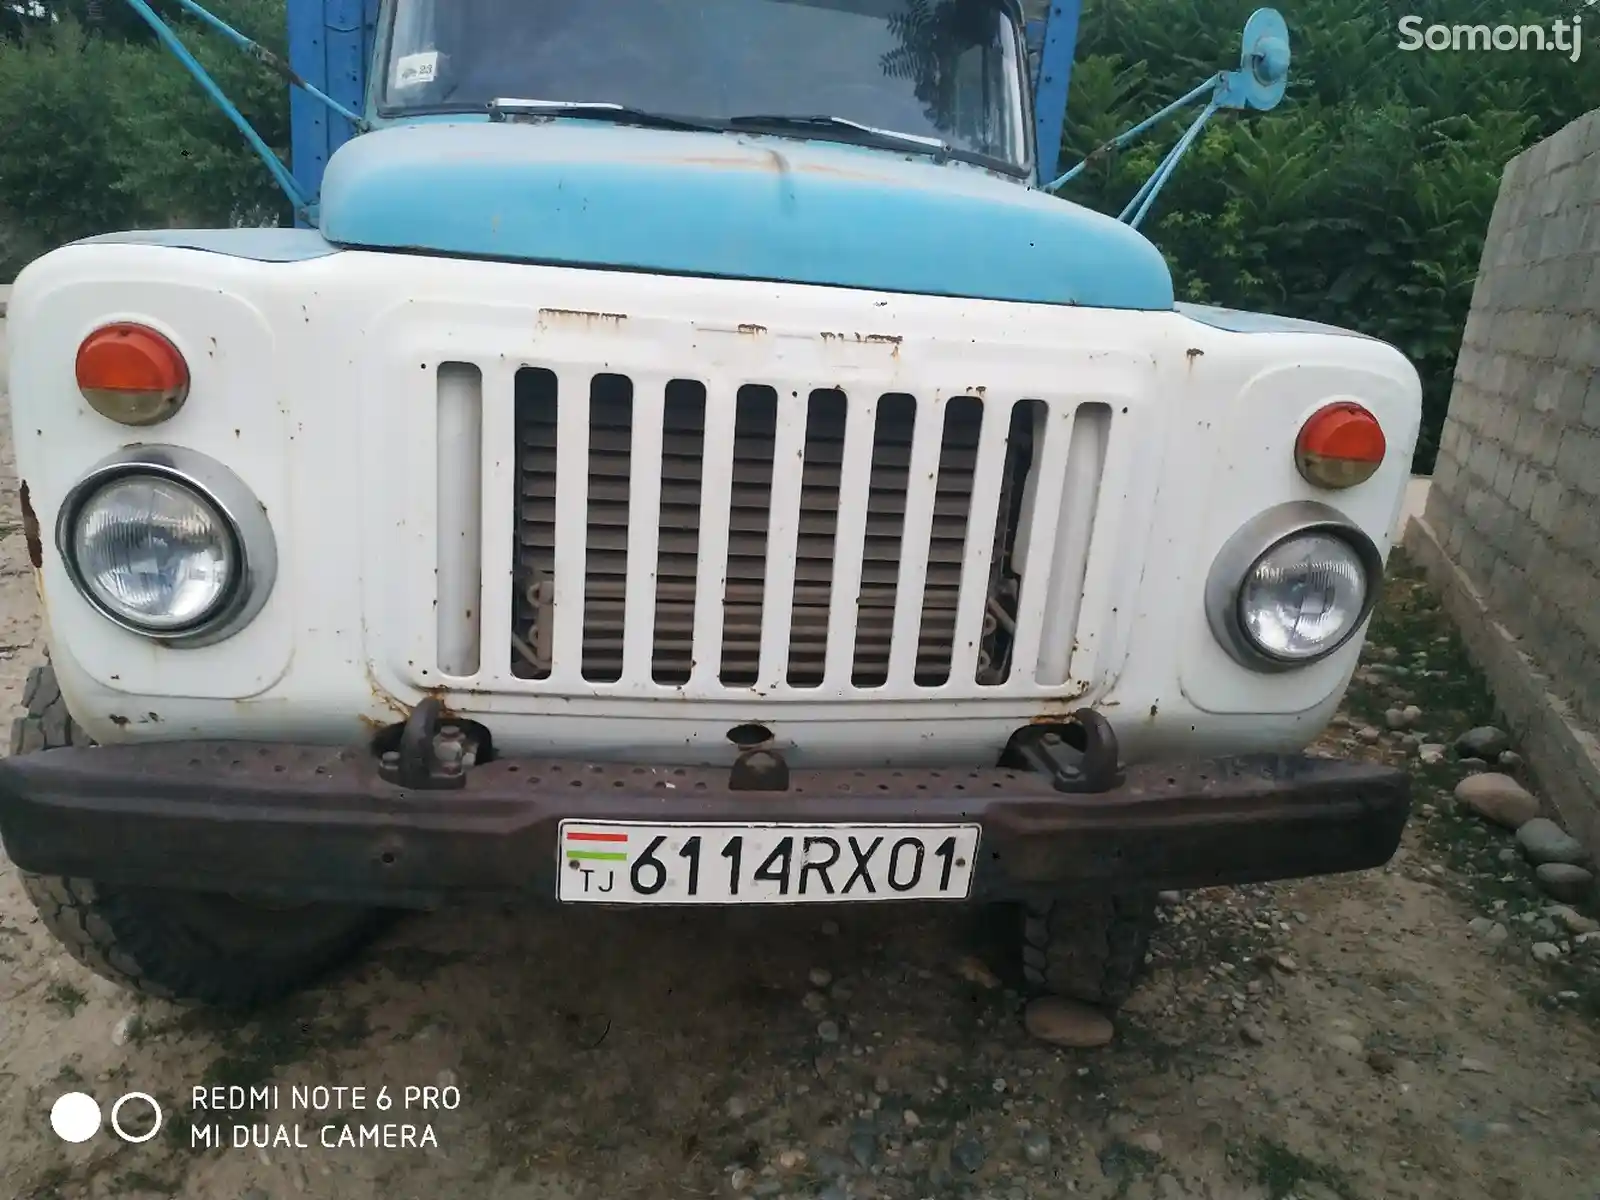 Бортовой грузовик Камаз, 1991-1